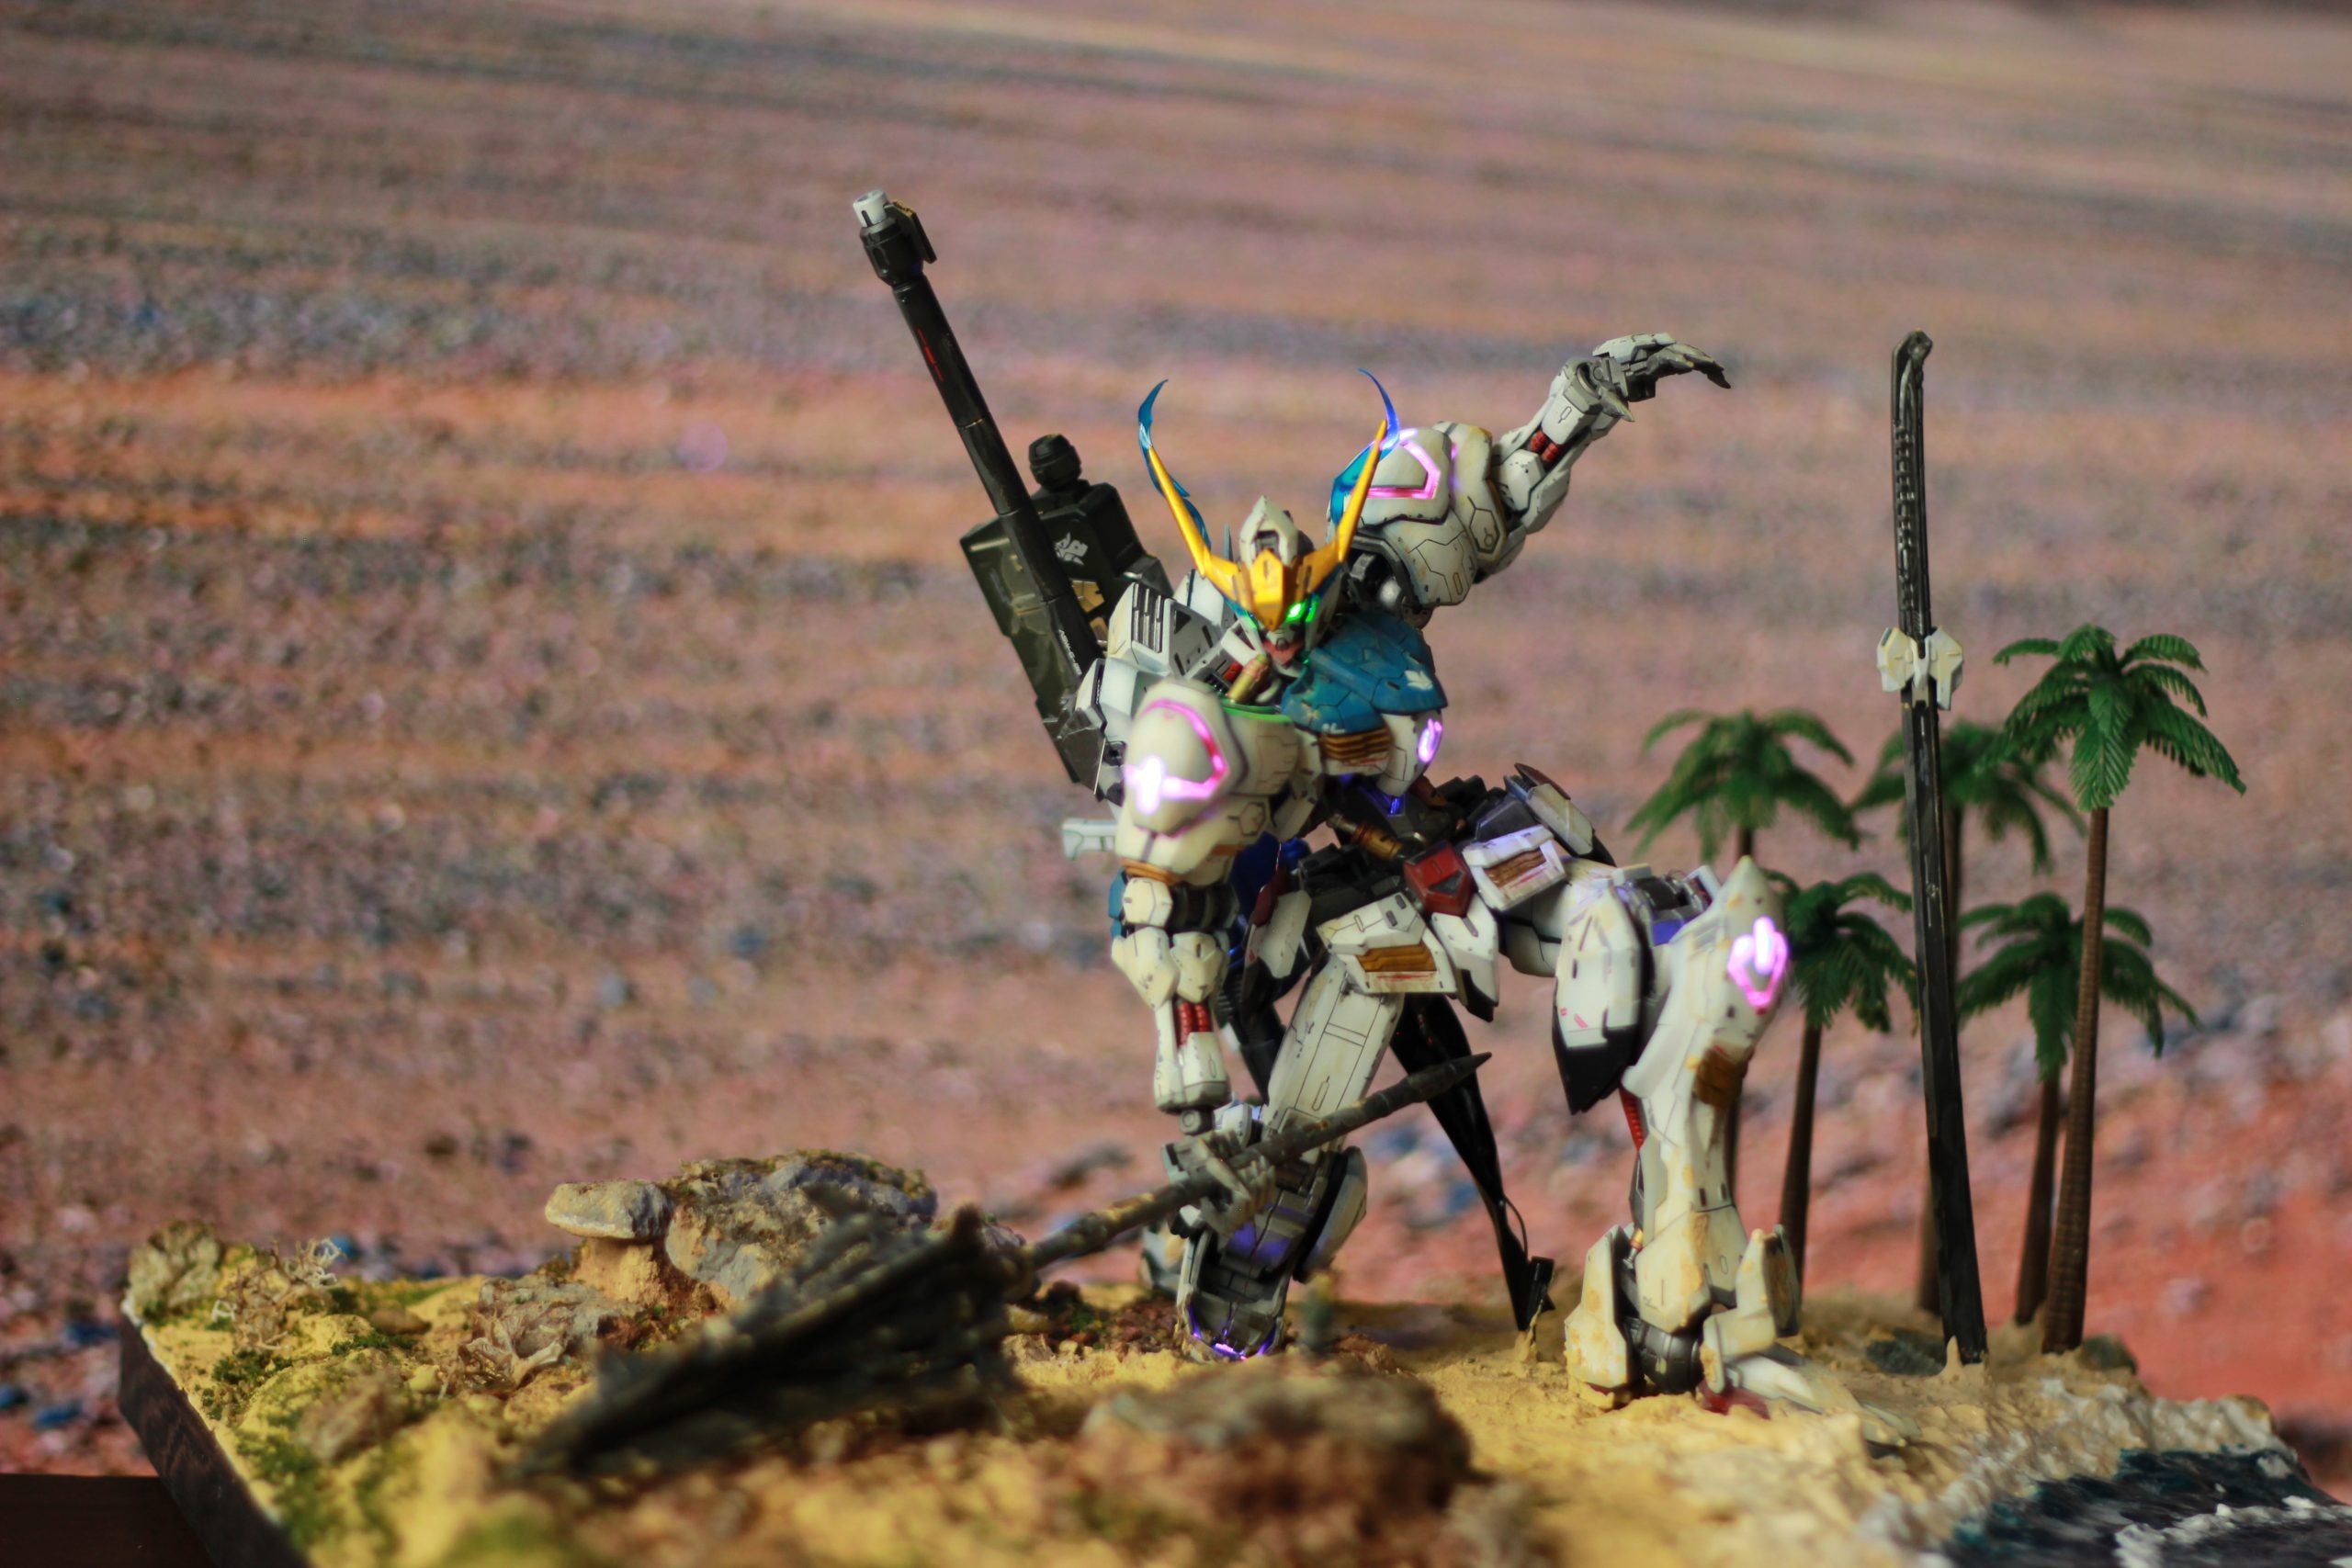 Gunpla Dioramas and Accessories – The Gundam Place Store